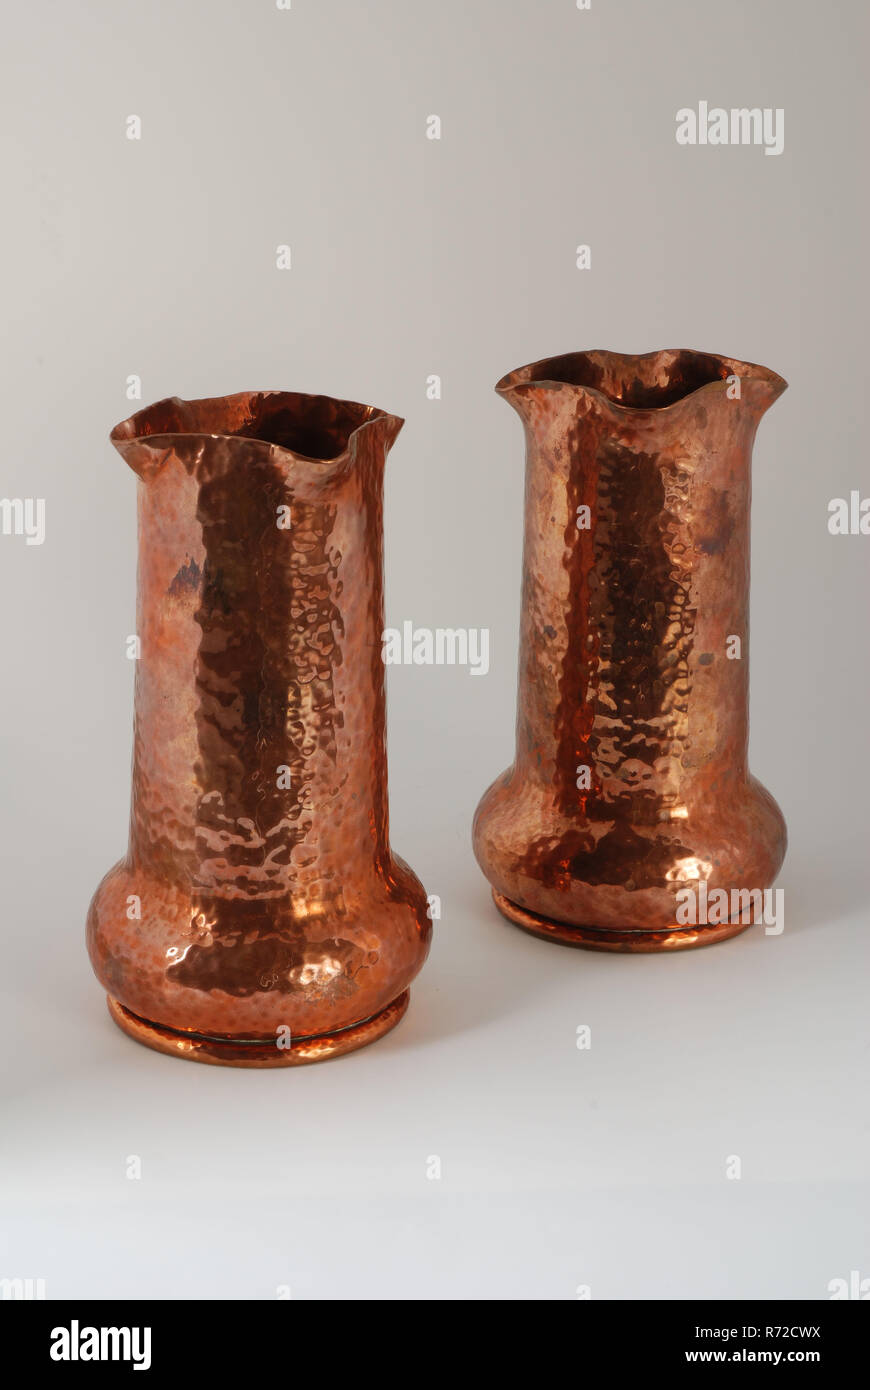 Copper vases -Fotos und -Bildmaterial in hoher Auflösung – Alamy